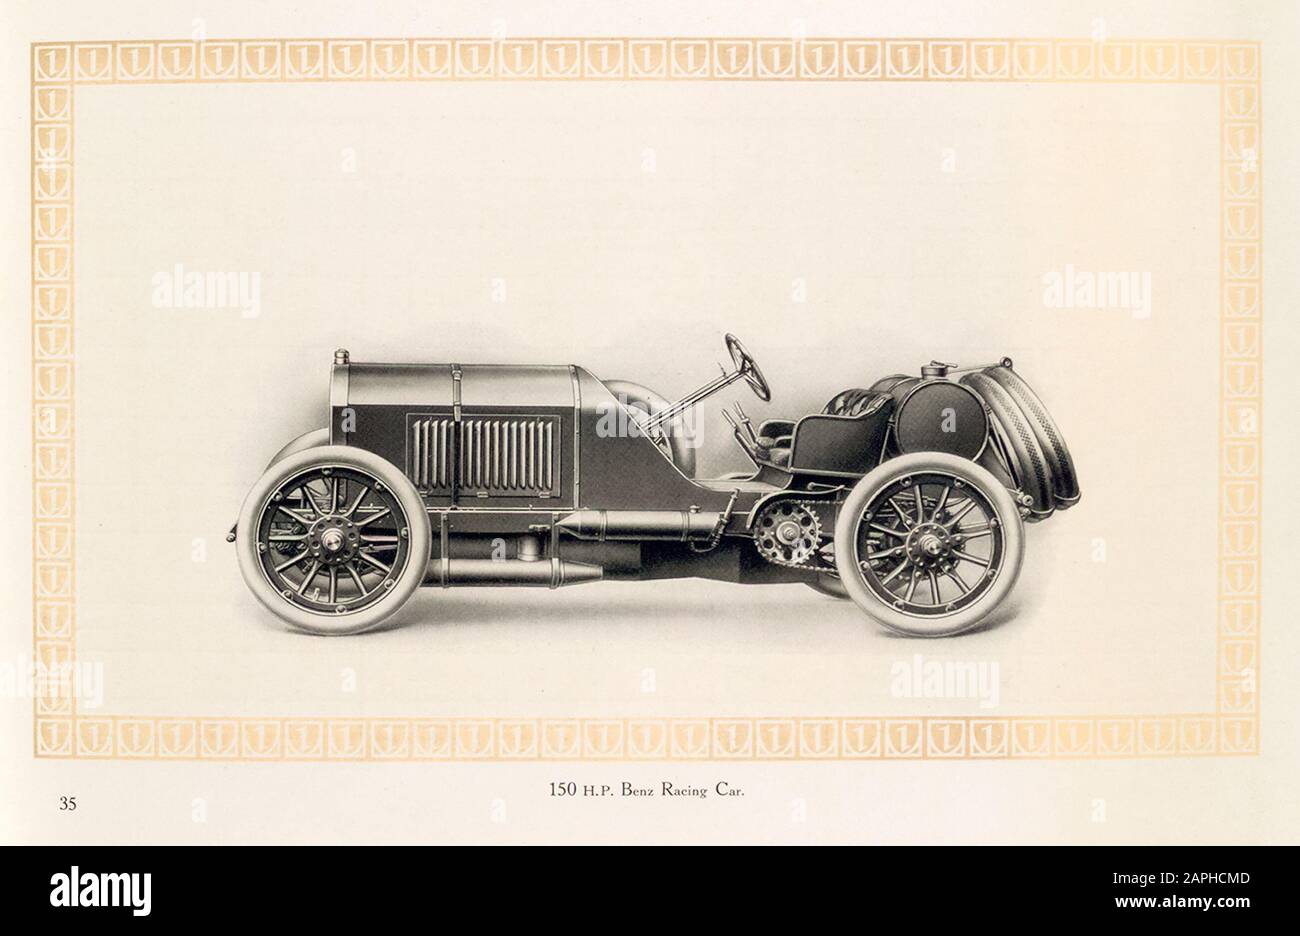 Vintage car, Benz motor car, automobile, 150 hp Benz Racing car, from the Benz & Co trade catalogue, illustration 1909 Stock Photo